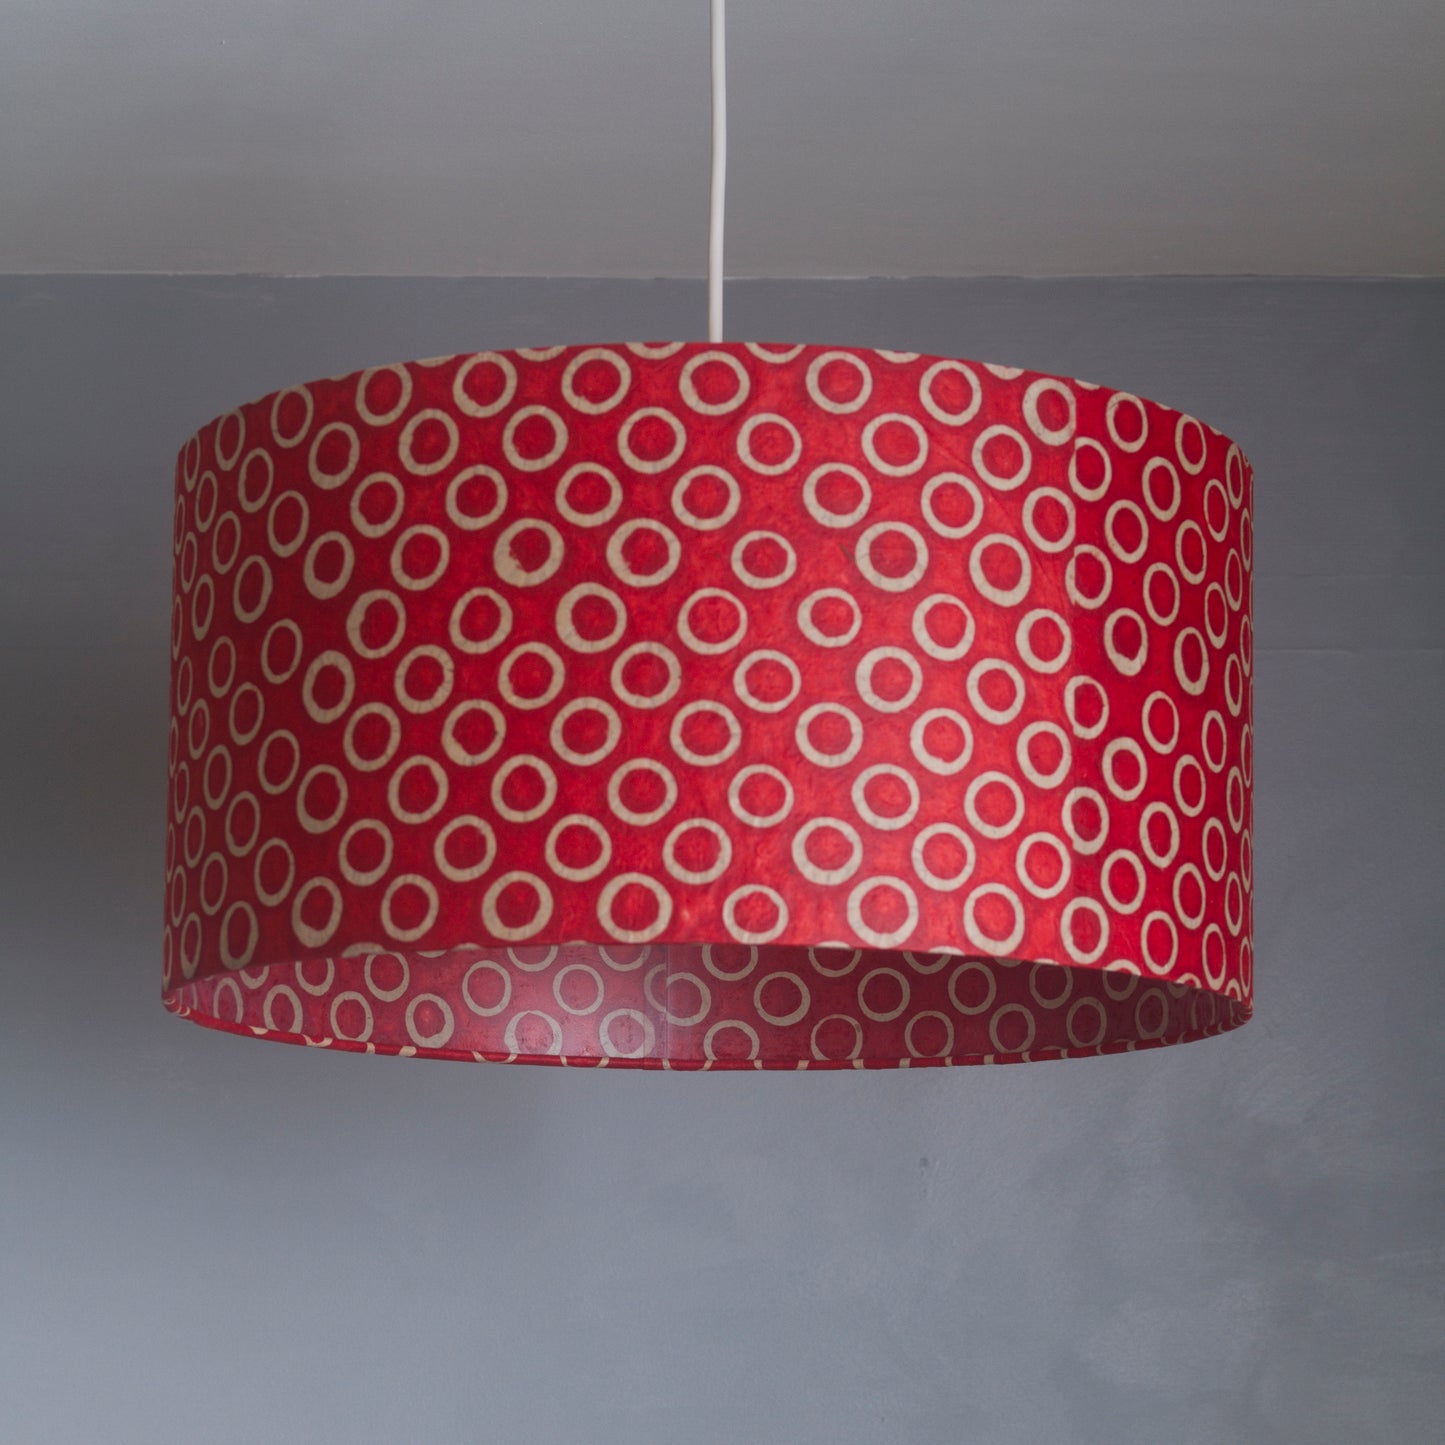 Oval Lamp Shade - P83 ~ Batik Red Circles, 30cm(w) x 20cm(h) x 22cm(d)